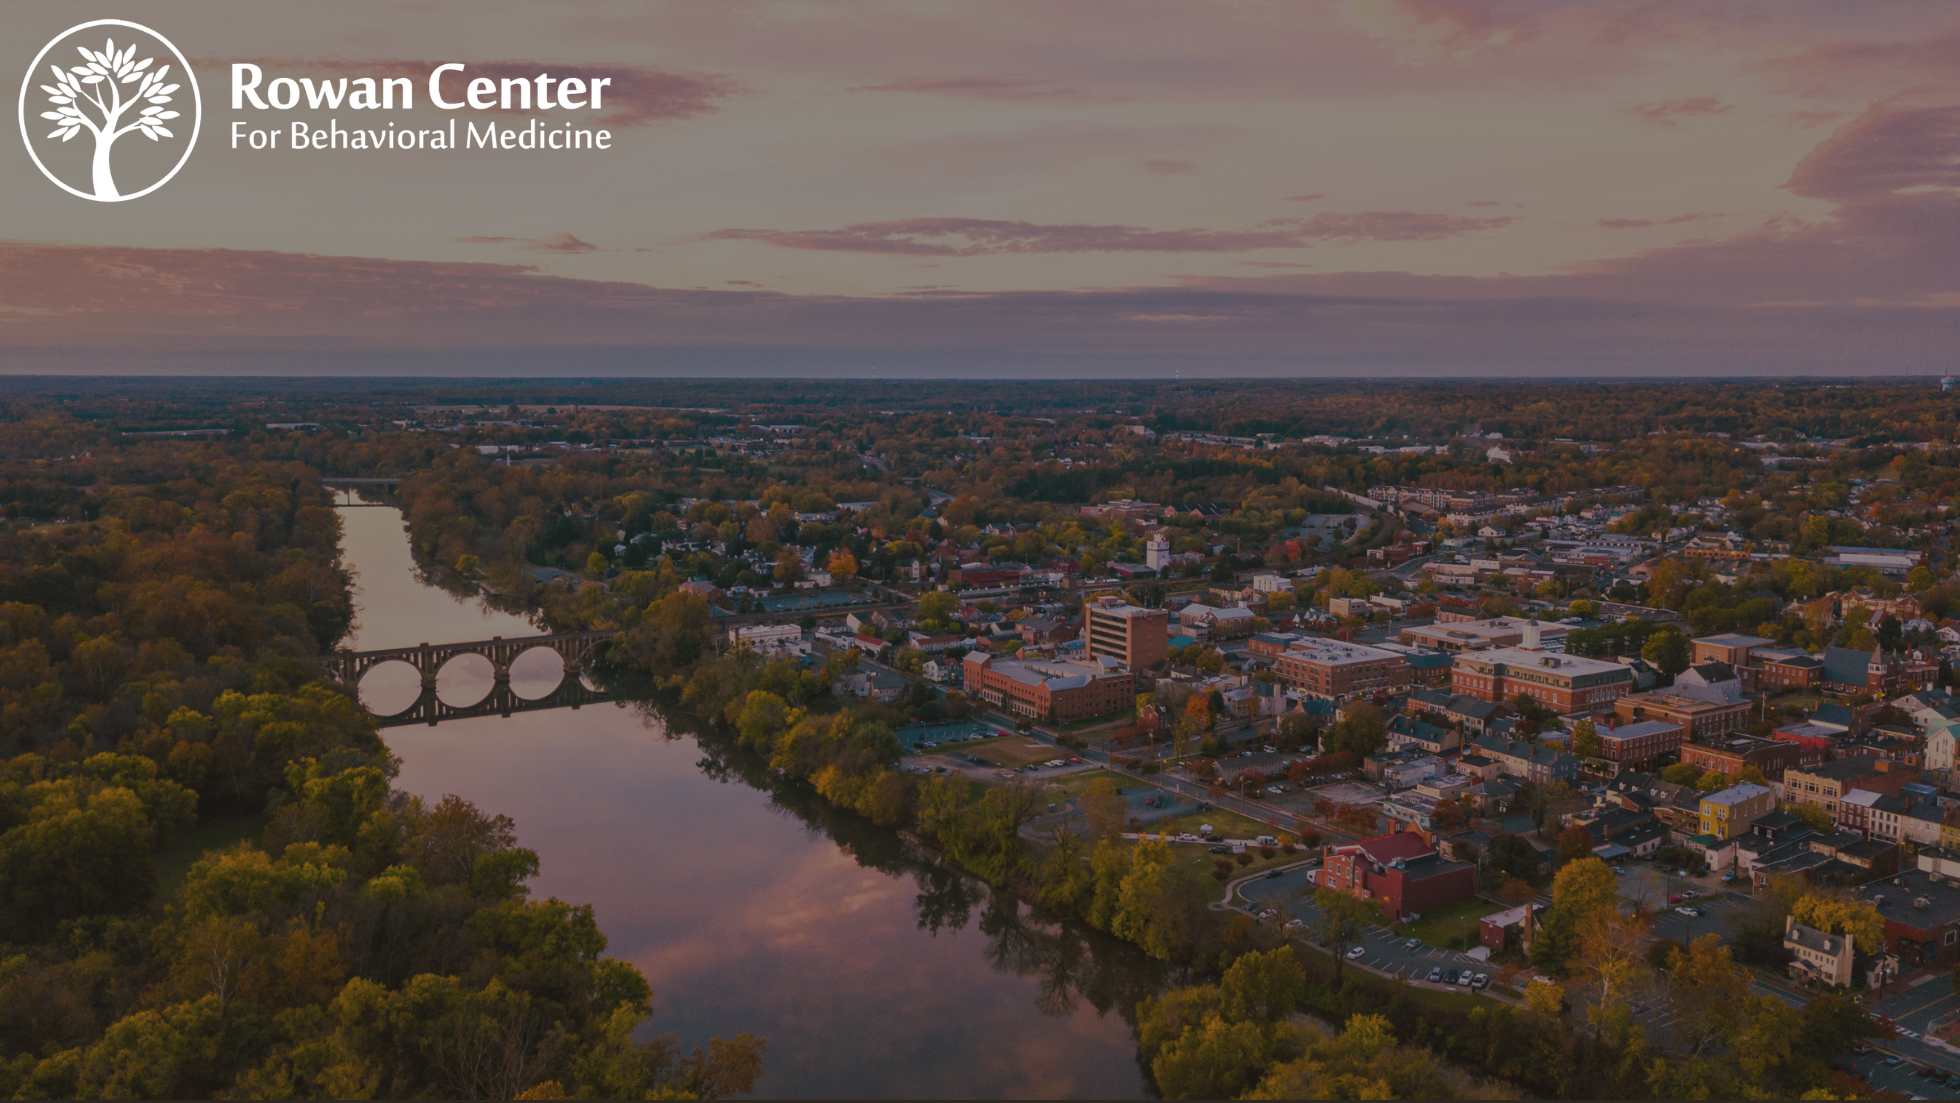 Rowan Center for Behavioral Medicine Virginia Location Hero Image - Overhead shot of Virginia with a quaint river and bridge